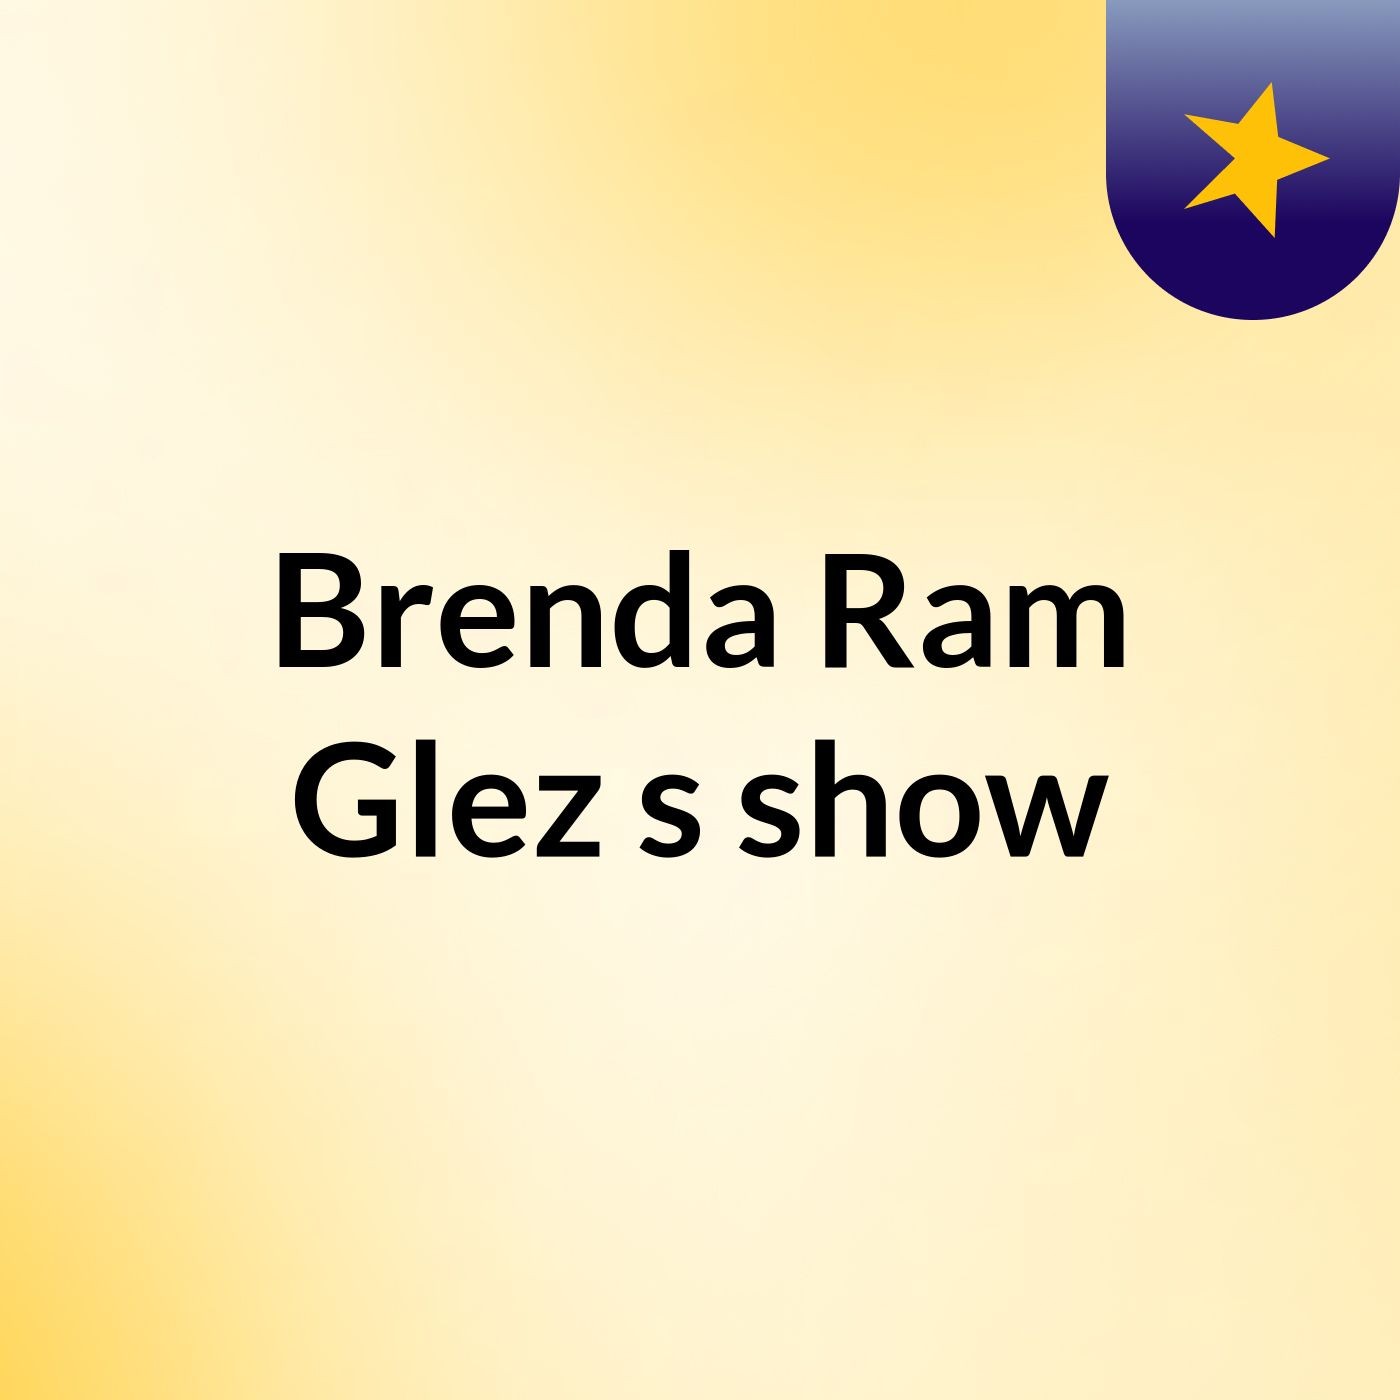 Brenda Ram Glez's show